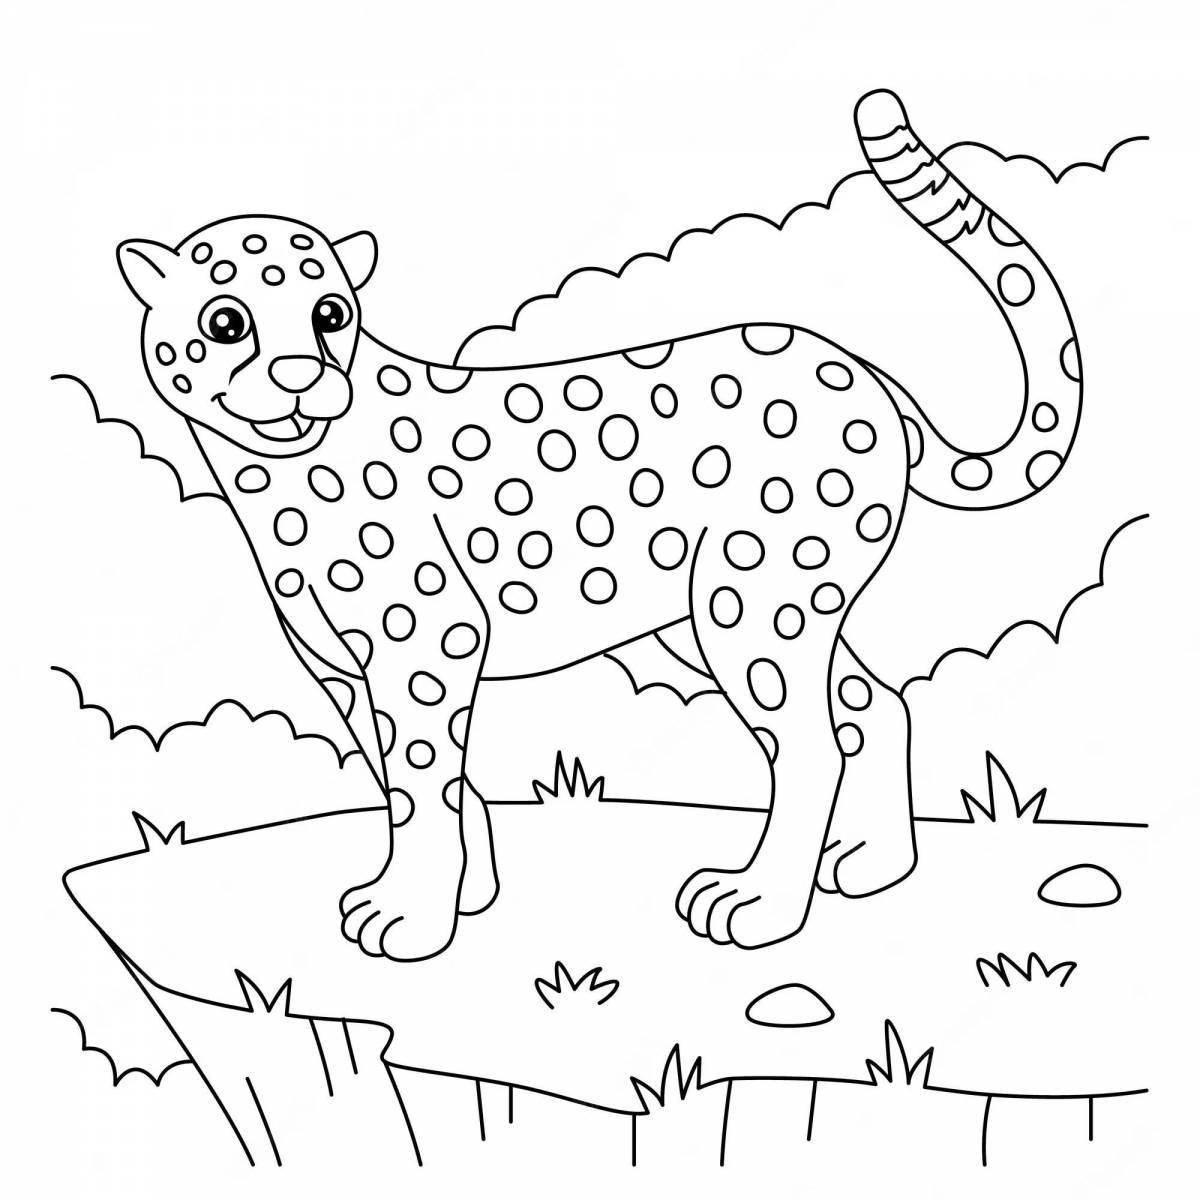 King cheetah #9